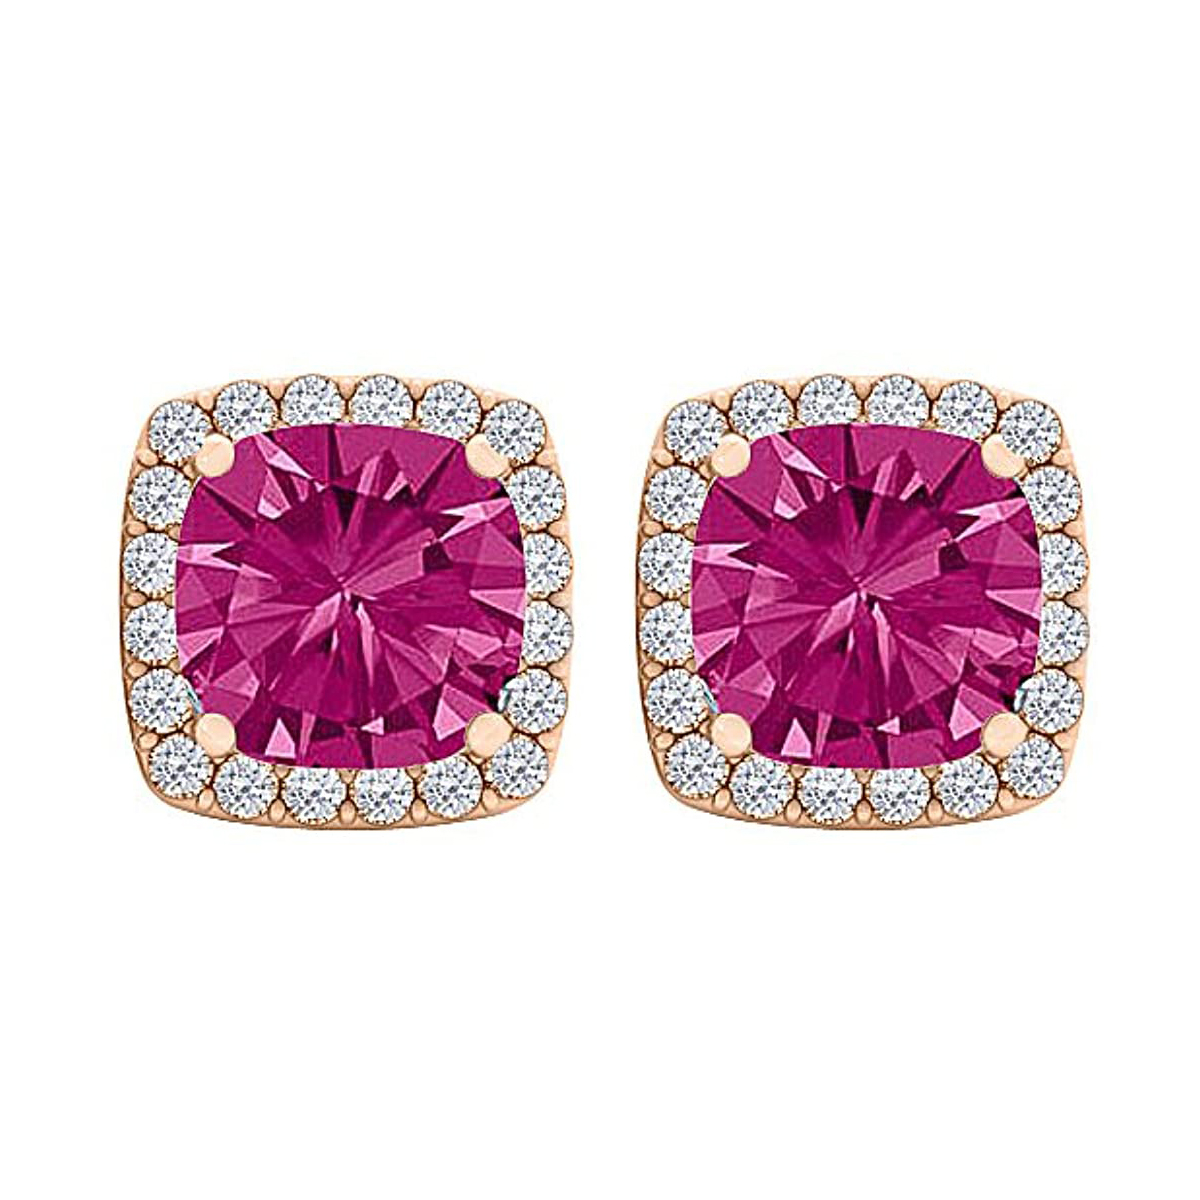 Paris Jewelry BJ Jewelry 10k Rose Gold 3 Carat Square Created Halo Sapphire Stud Earrings